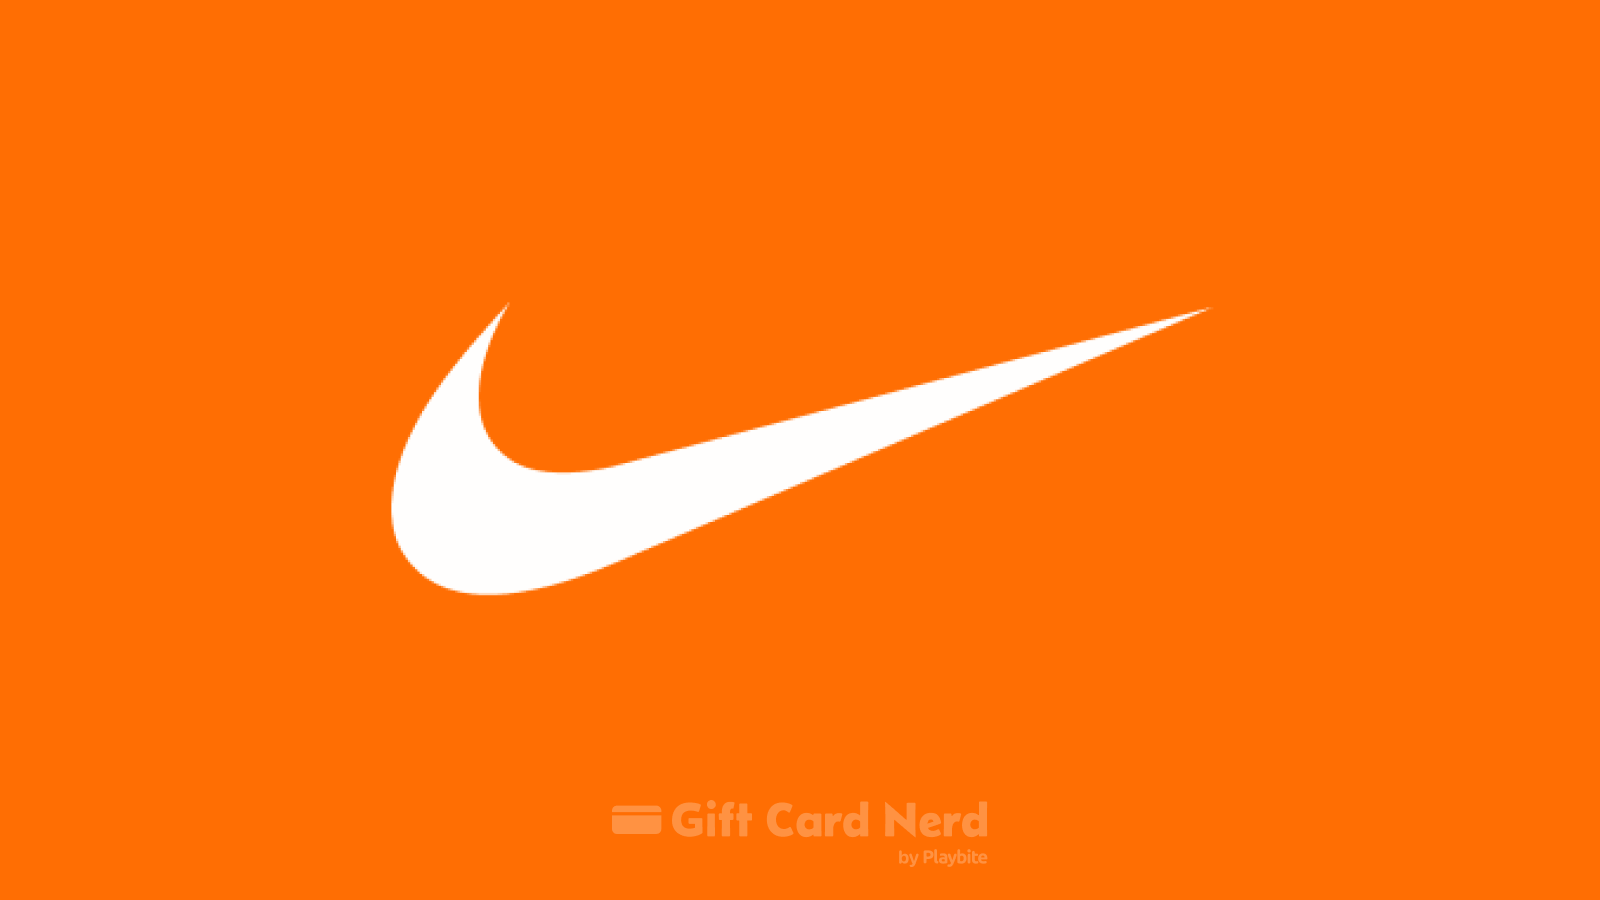 Can I Use a Nike Gift Card on Venmo?